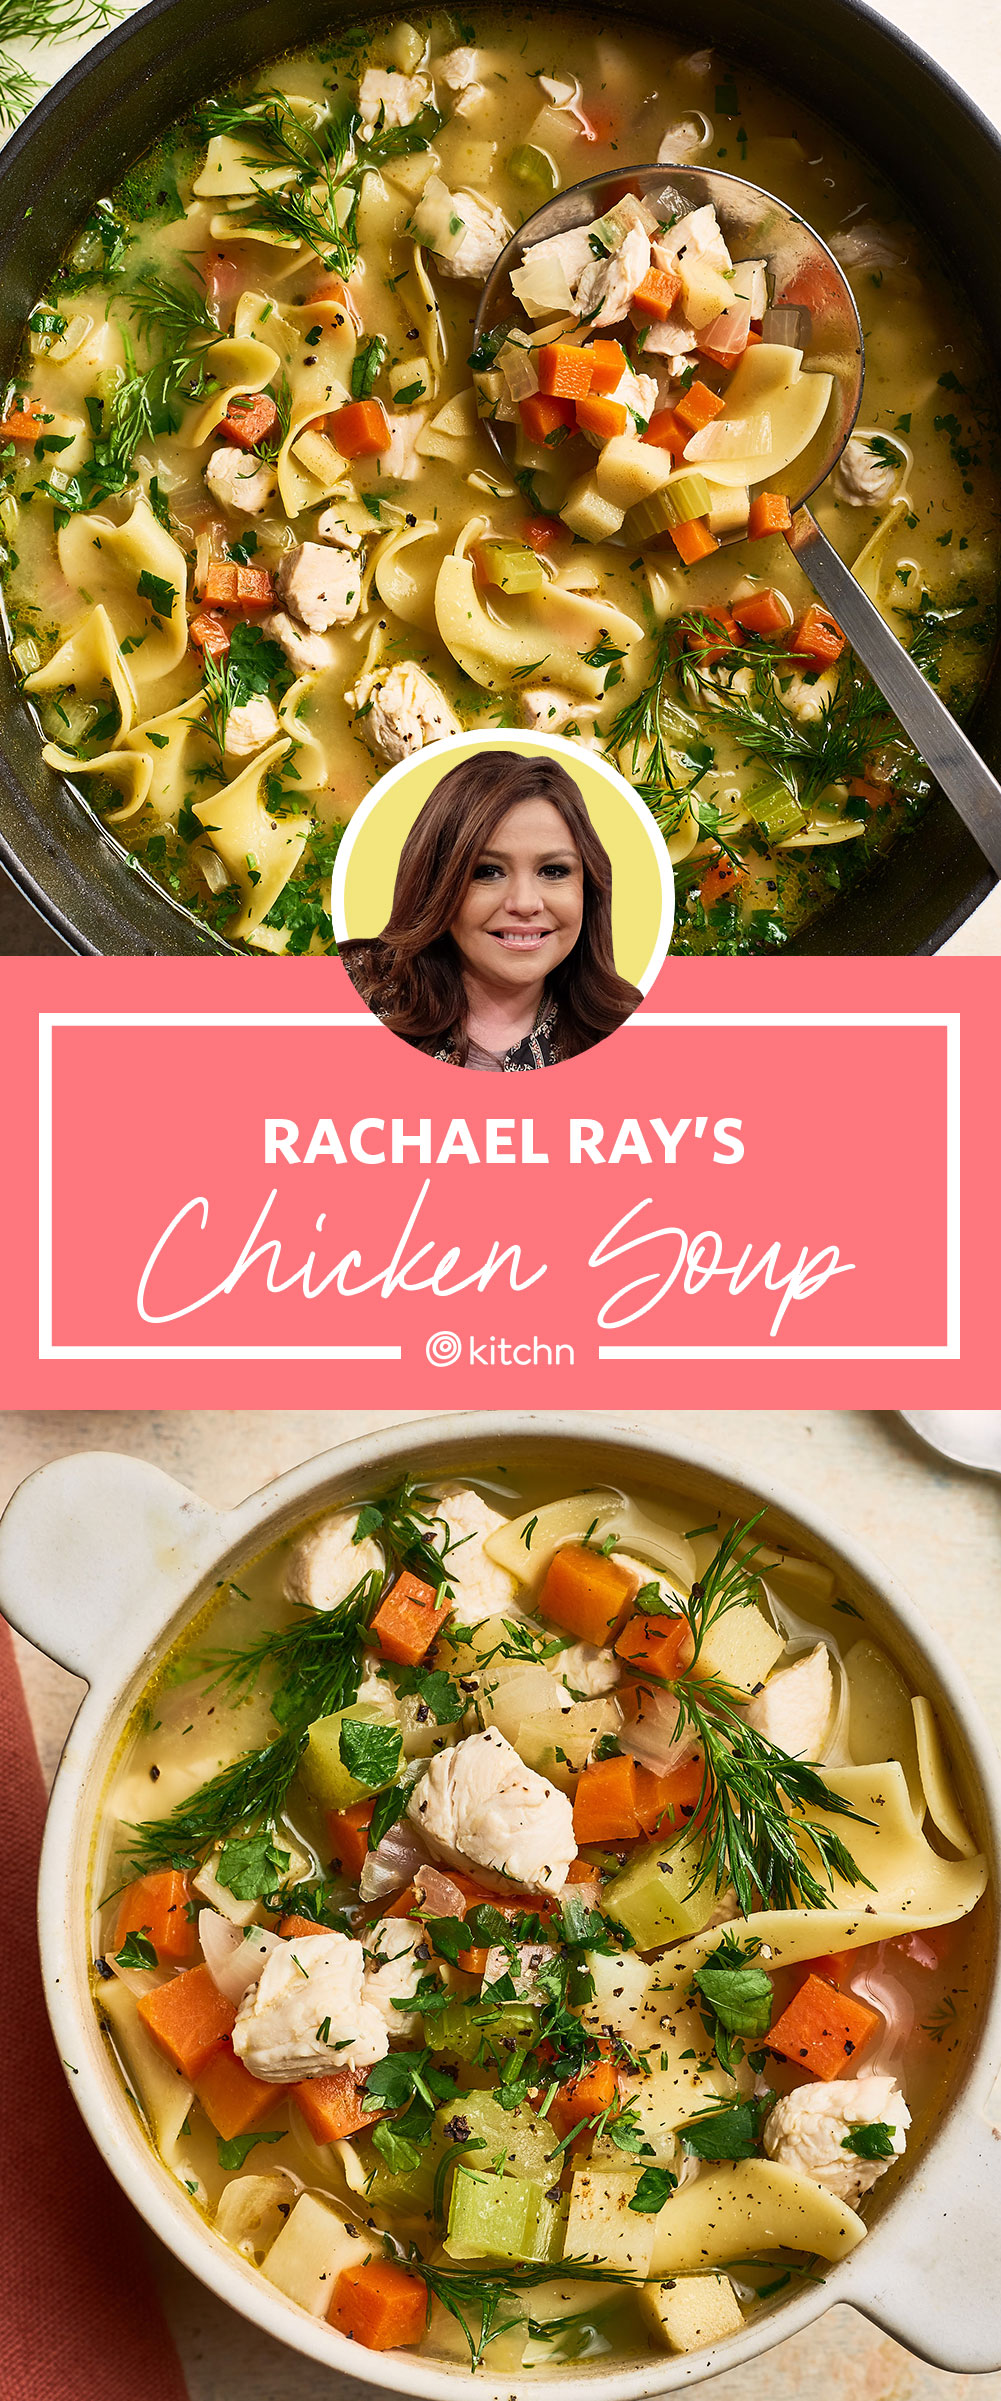 rachael ray chicken chop suey